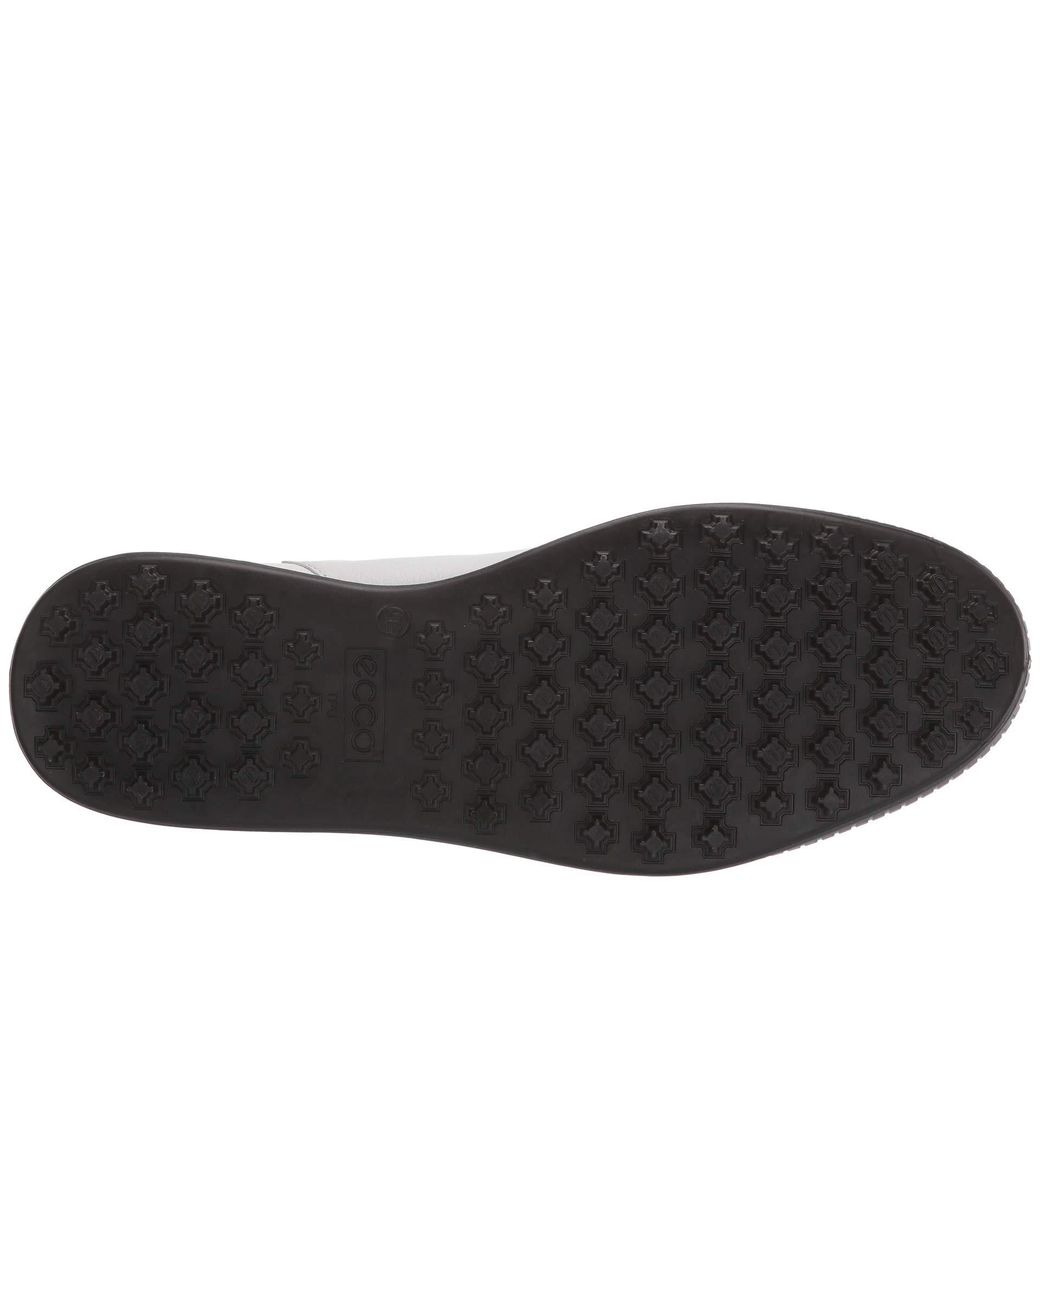 Ecco Street Retro Lx (black) Men's Golf Shoes for Men | Lyst